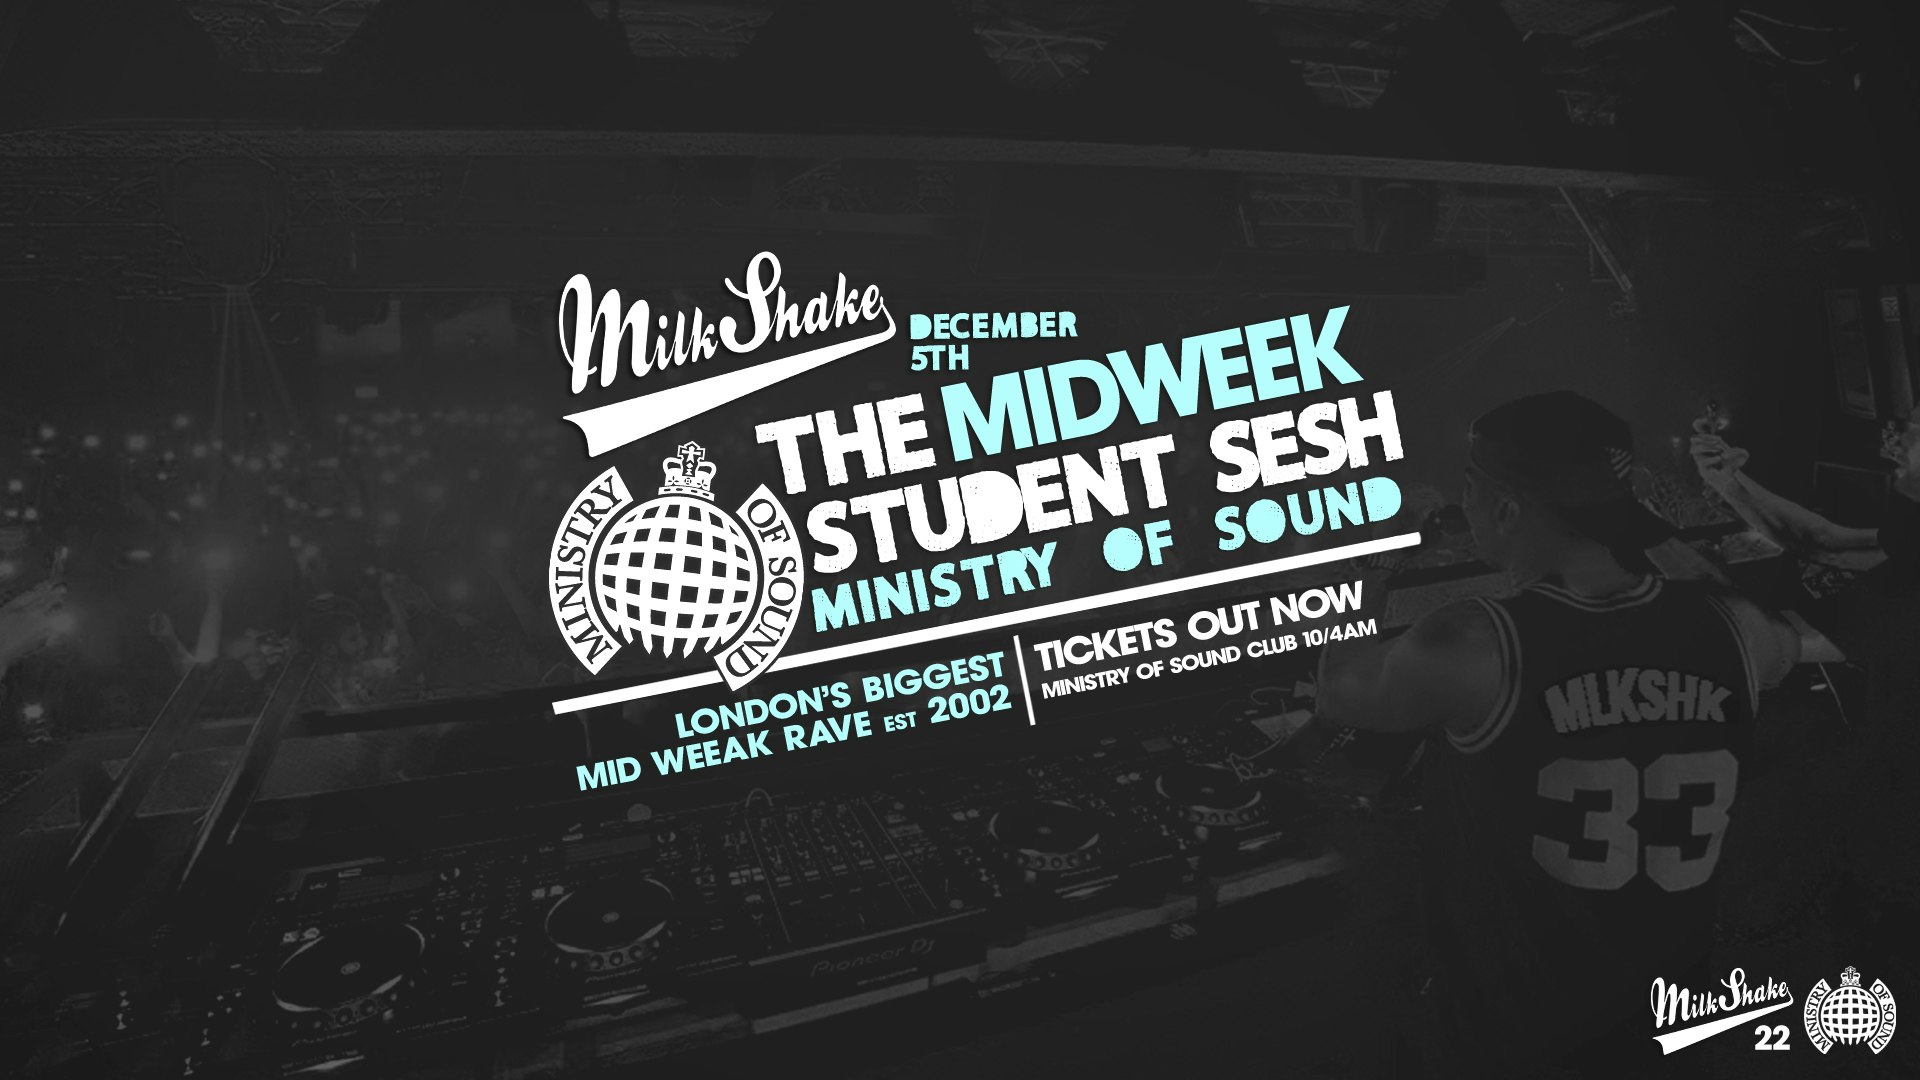 Milkshake, Ministry of Sound | London’s Biggest Student Night 🔥Dec 5th 🌍